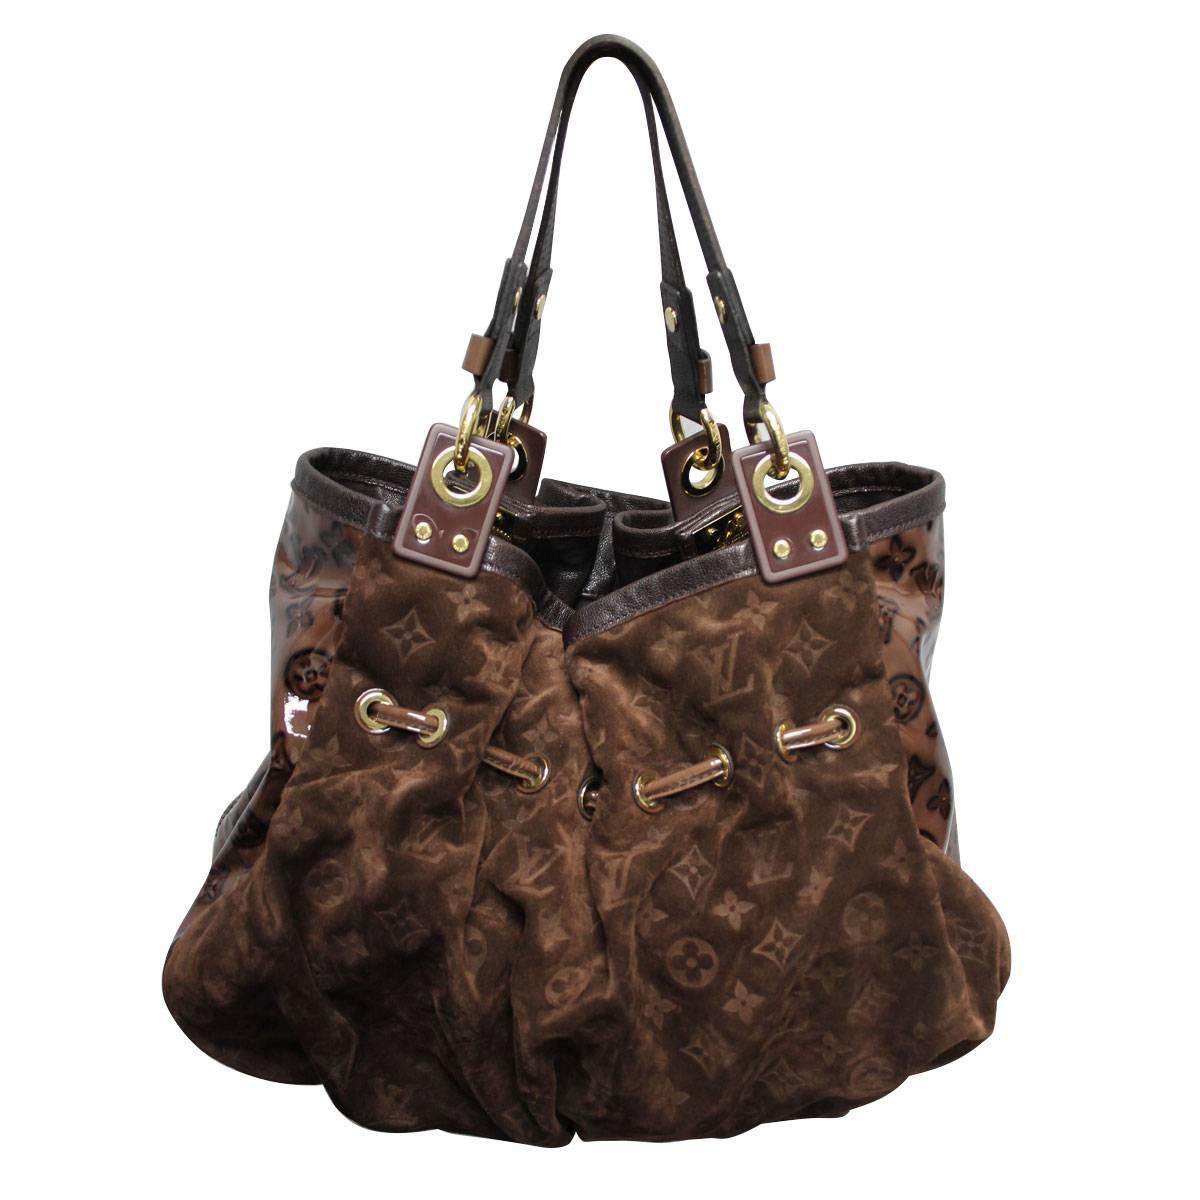 Company: Louis Vuitton
Style: Large Shoulder Bag
Materials: Espresso Suede, Patent Leather
Handles: Brown Leather Handles, Drop: 6